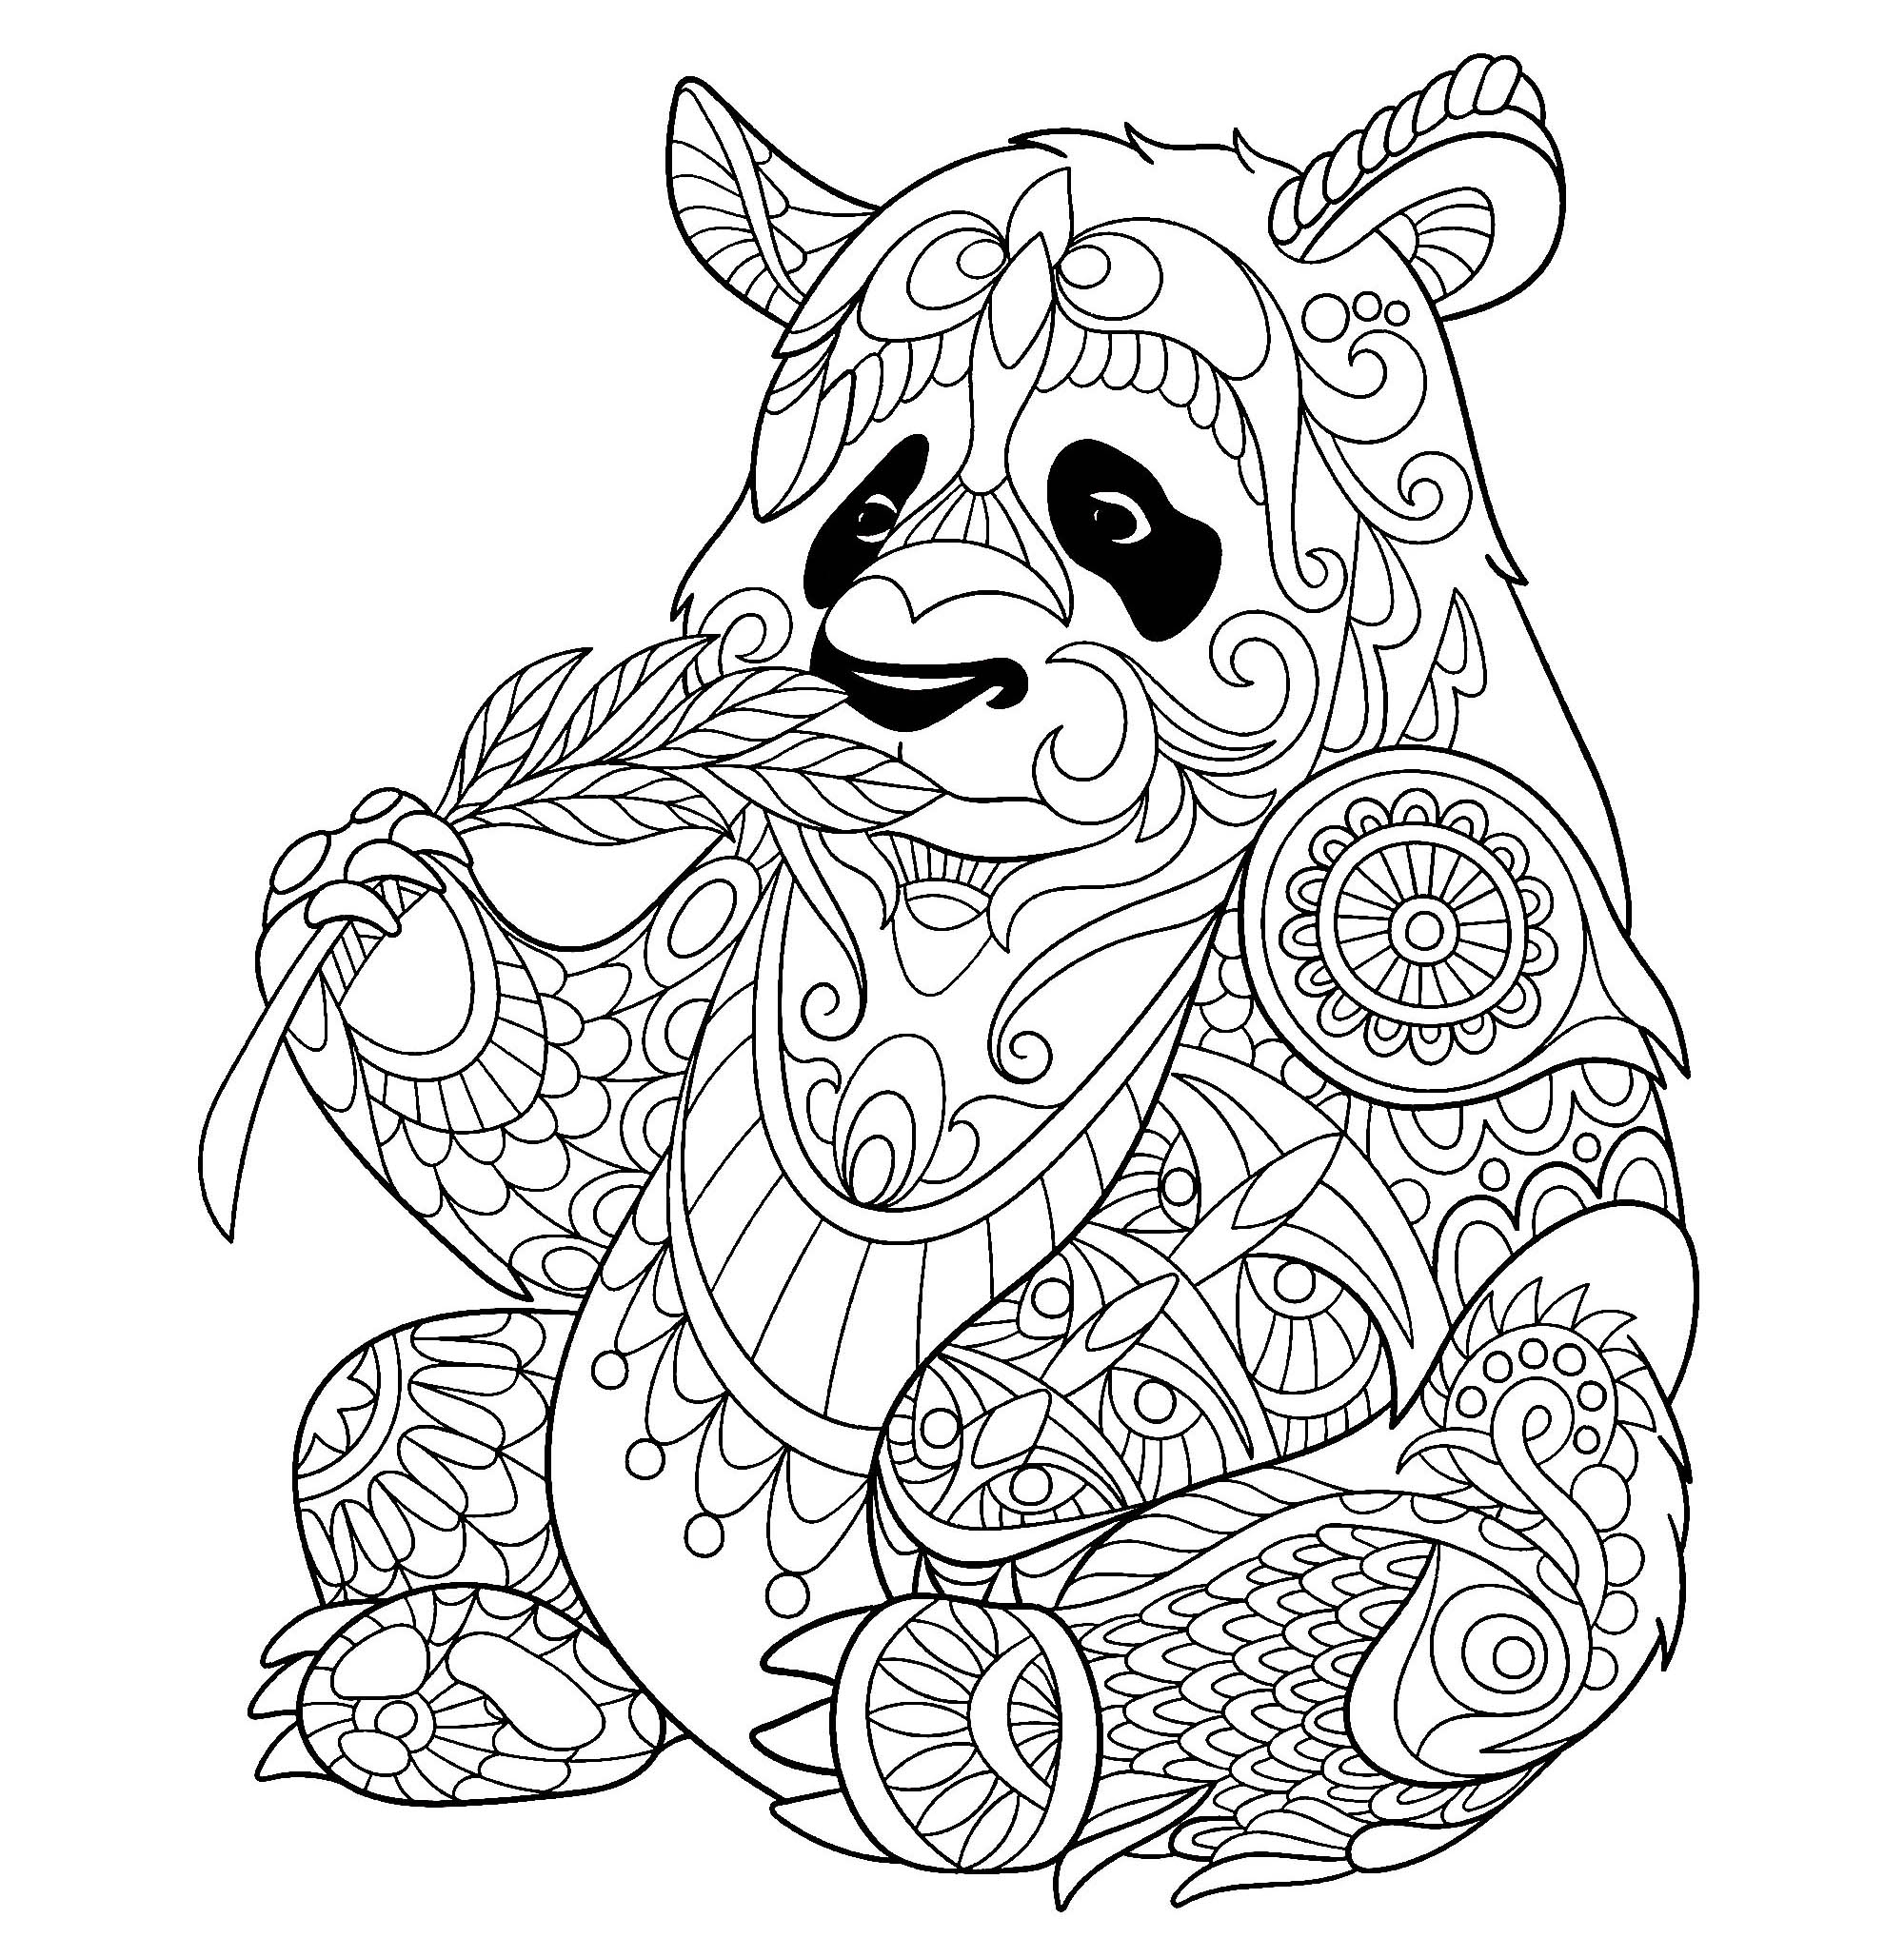 Pandas coloring page to download